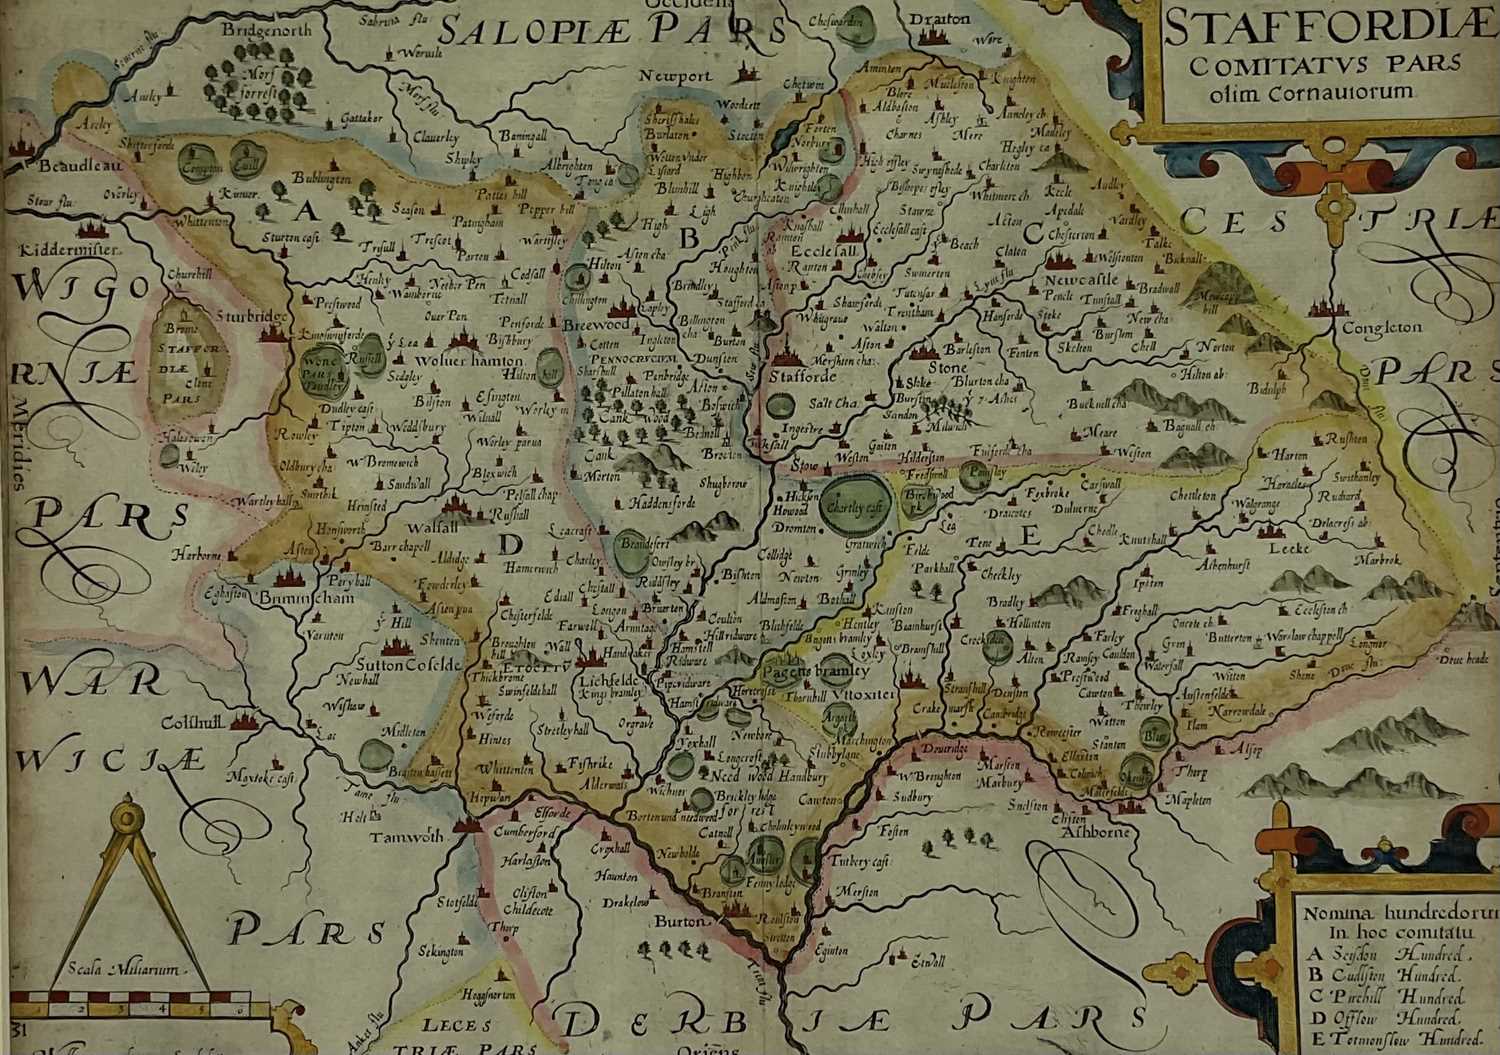 JOHN NORDEN (1547-1625) & WILLIAM KIP (fl. 1585-1618), 'Staffordiae, comitatvs pars olim